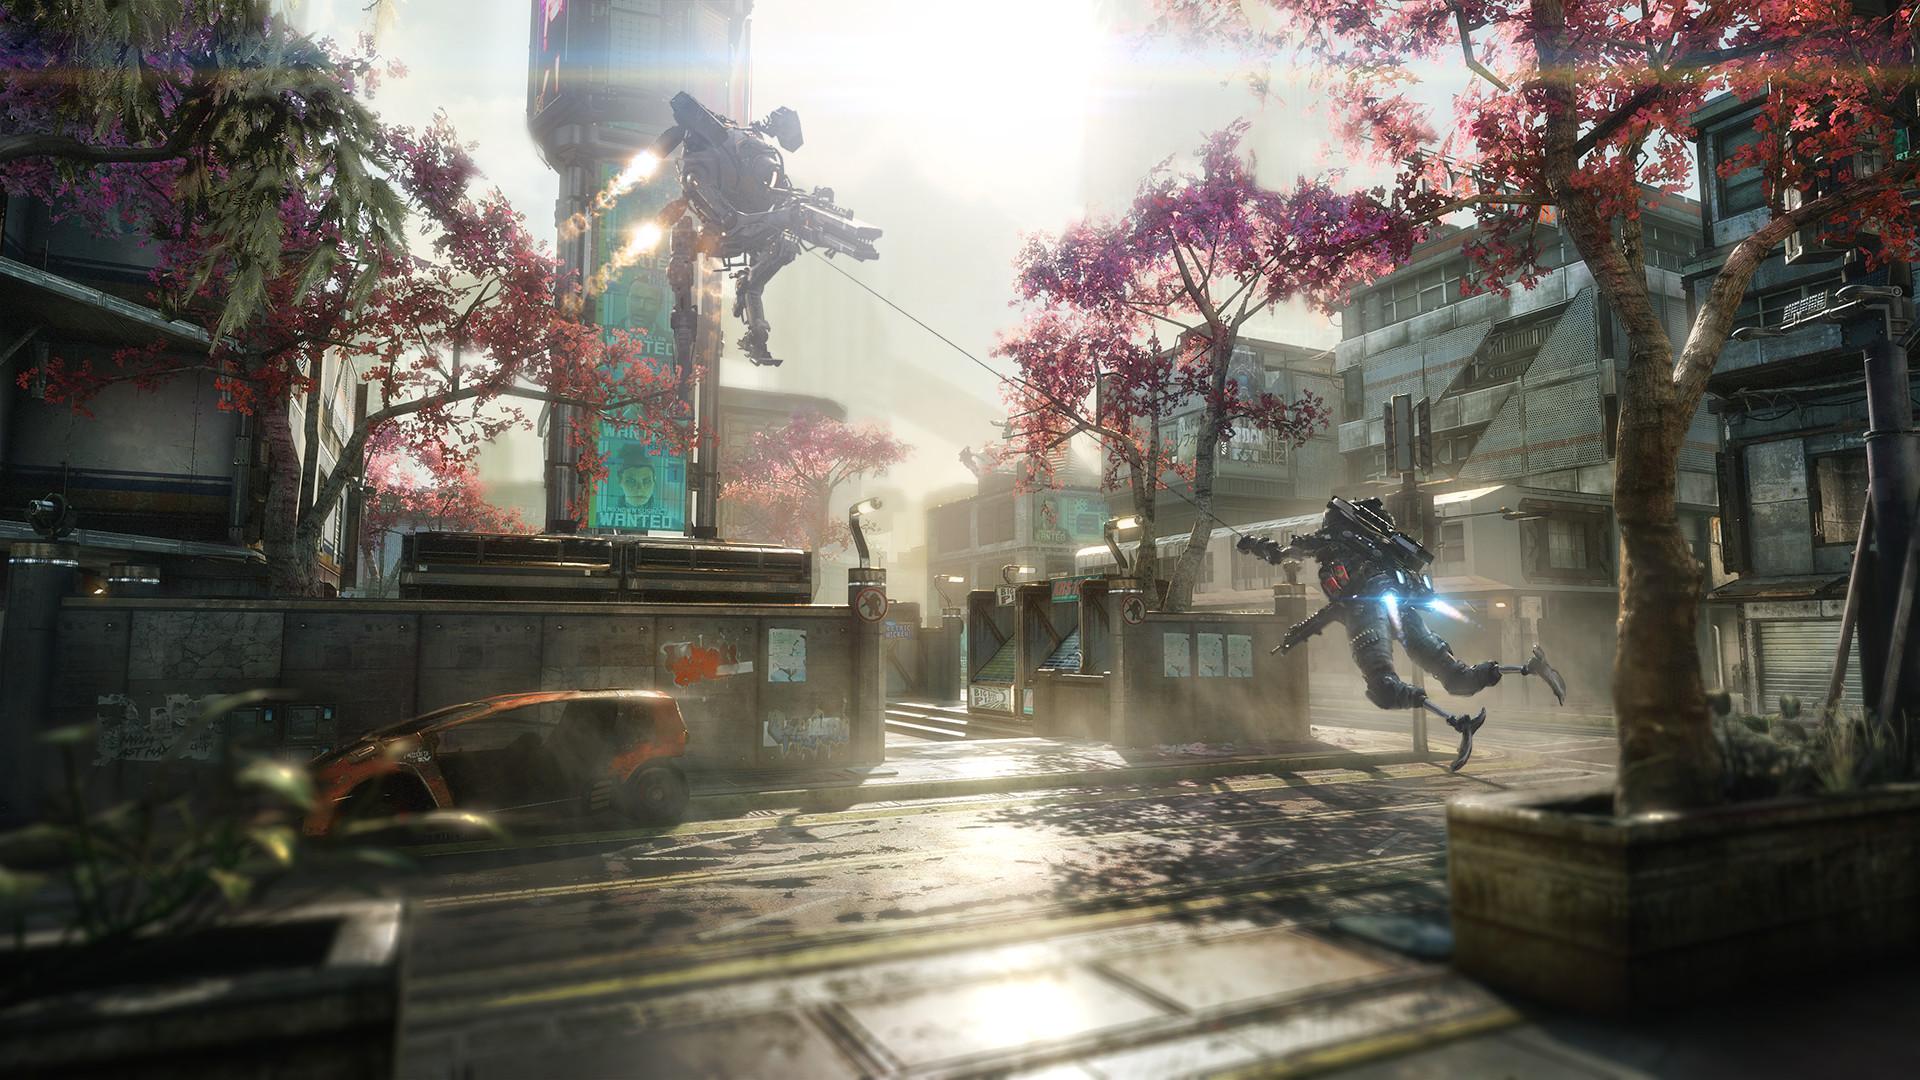 Screenshot №1 from game Titanfall® 2